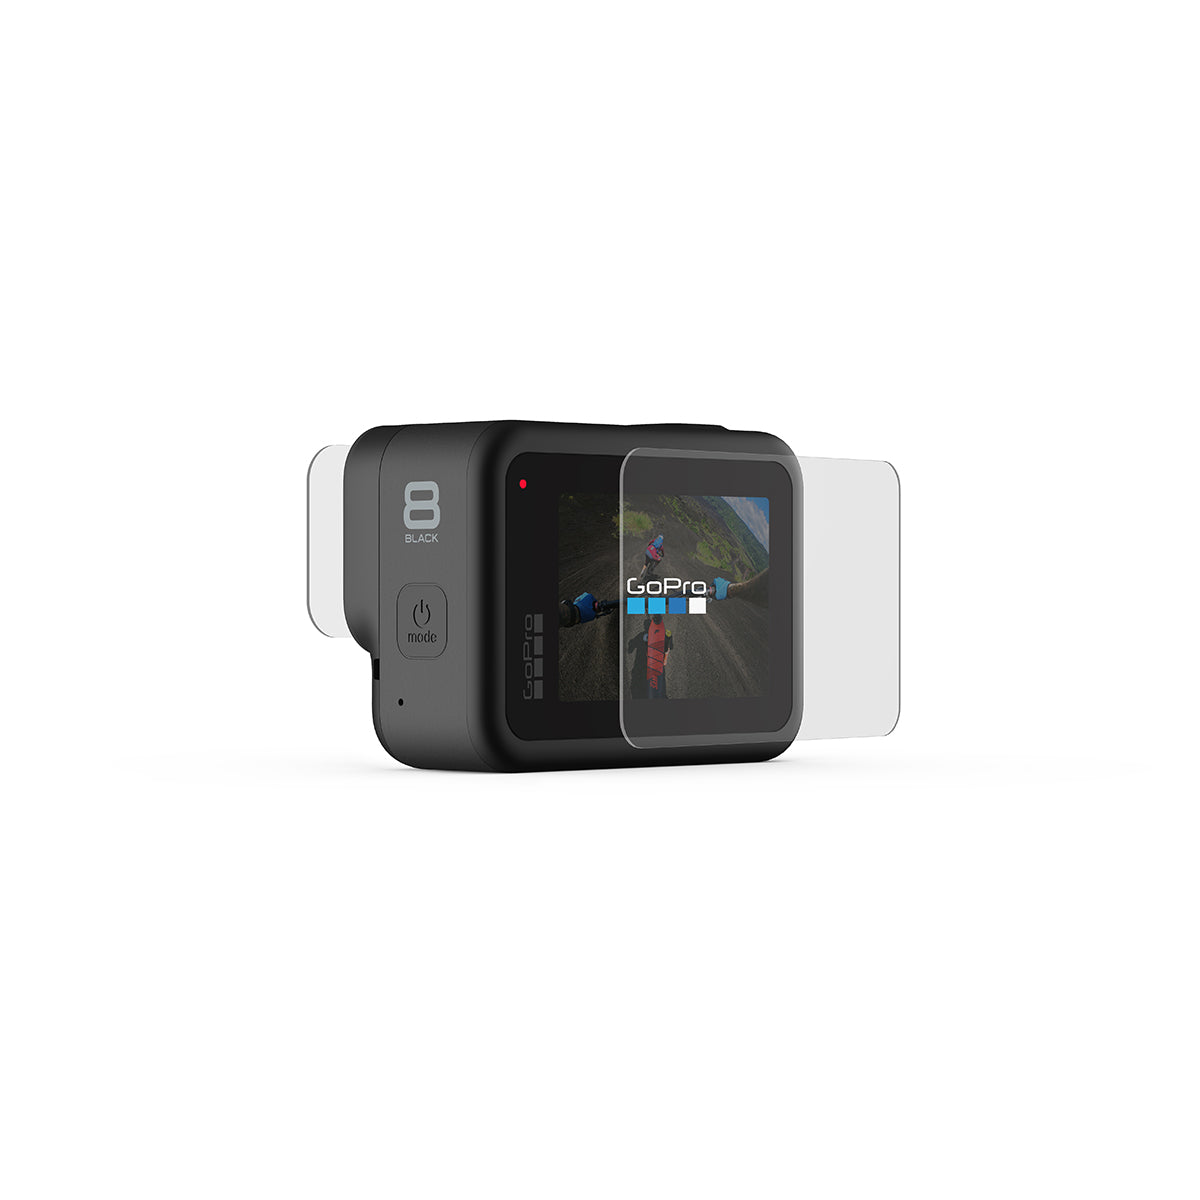 GoPro HERO8 BLACK 強化玻璃鏡頭 + 螢幕保護貼 運動相機配件 Microworks Online Store